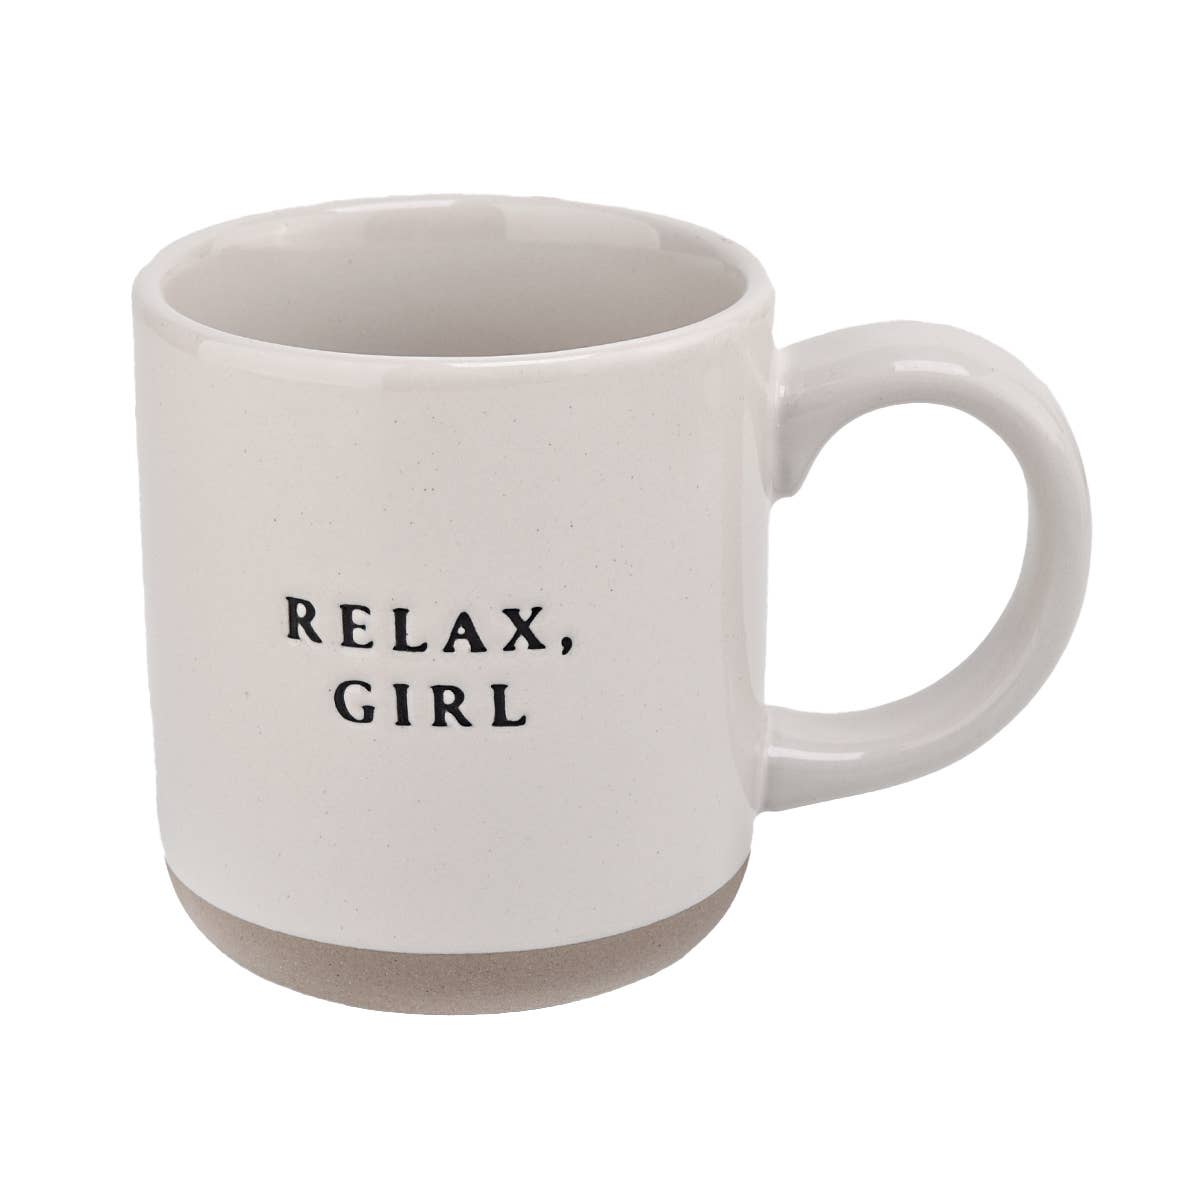 Relax Girl - Cream Stoneware Coffee Mug - 14 oz